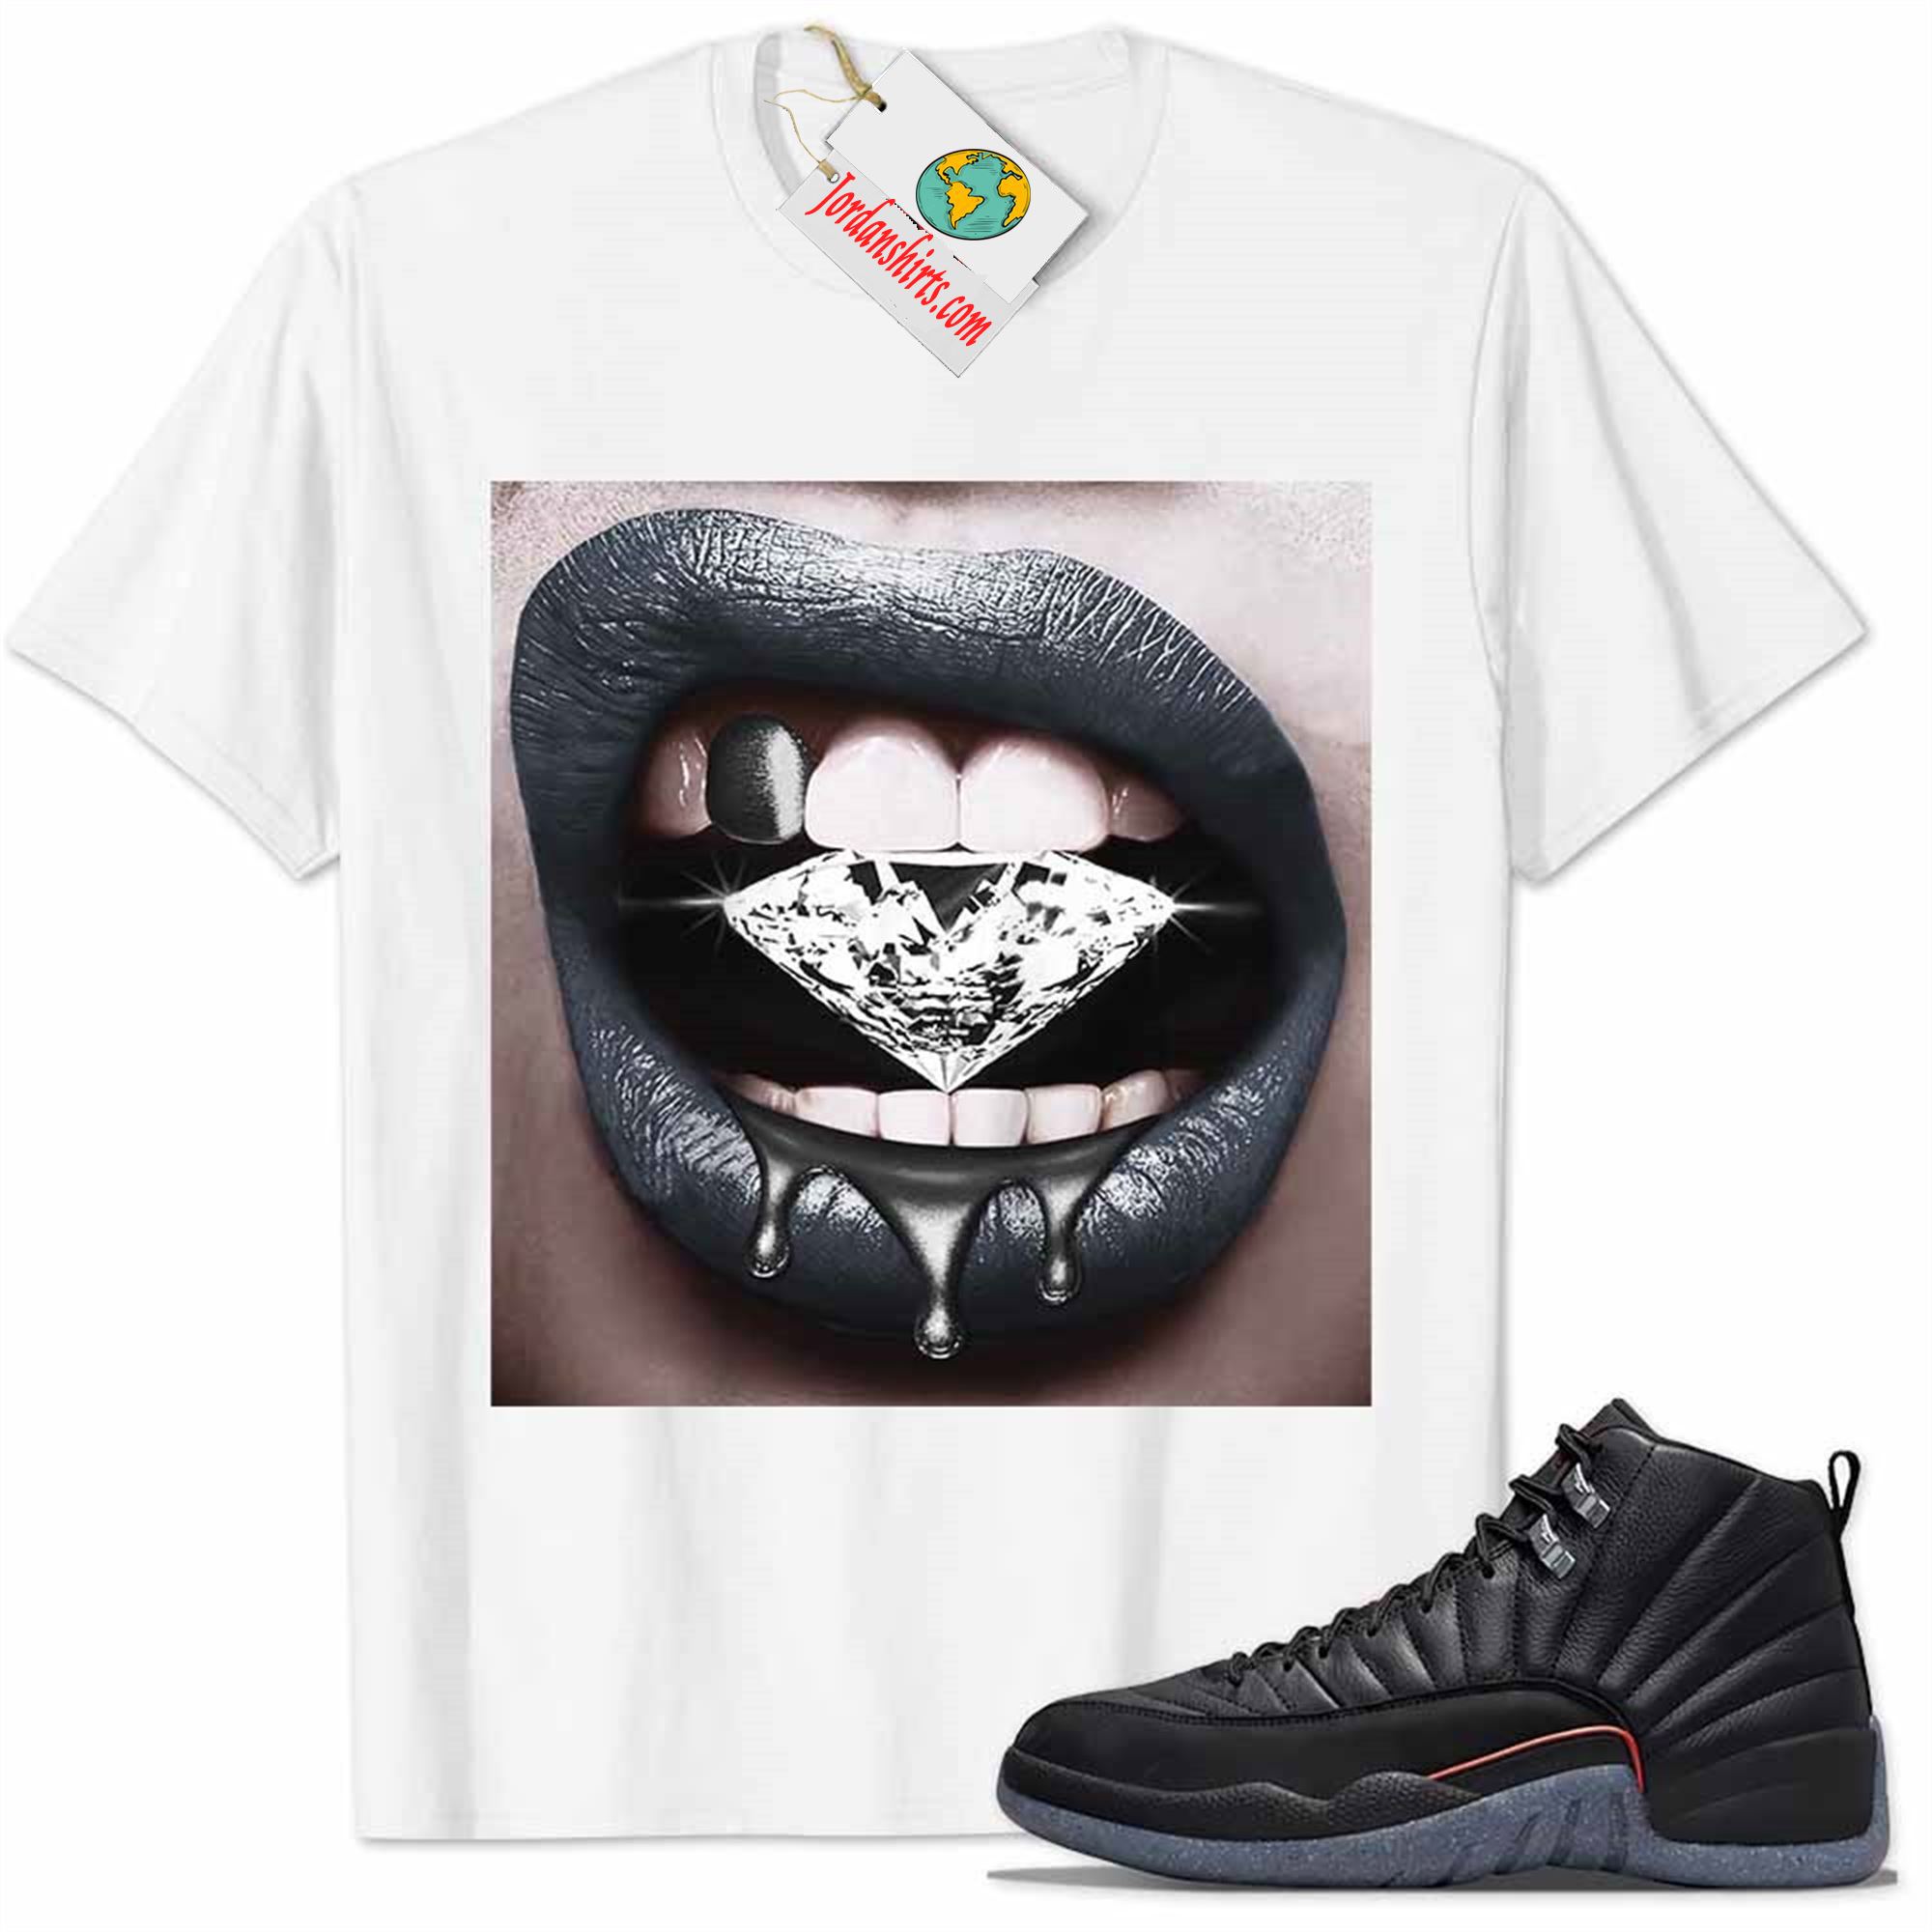 Jordan 12 Shirt, Jordan 12 Utility Grind Shirt Sexy Lip Bite Diamond Dripping White Full Size Up To 5xl